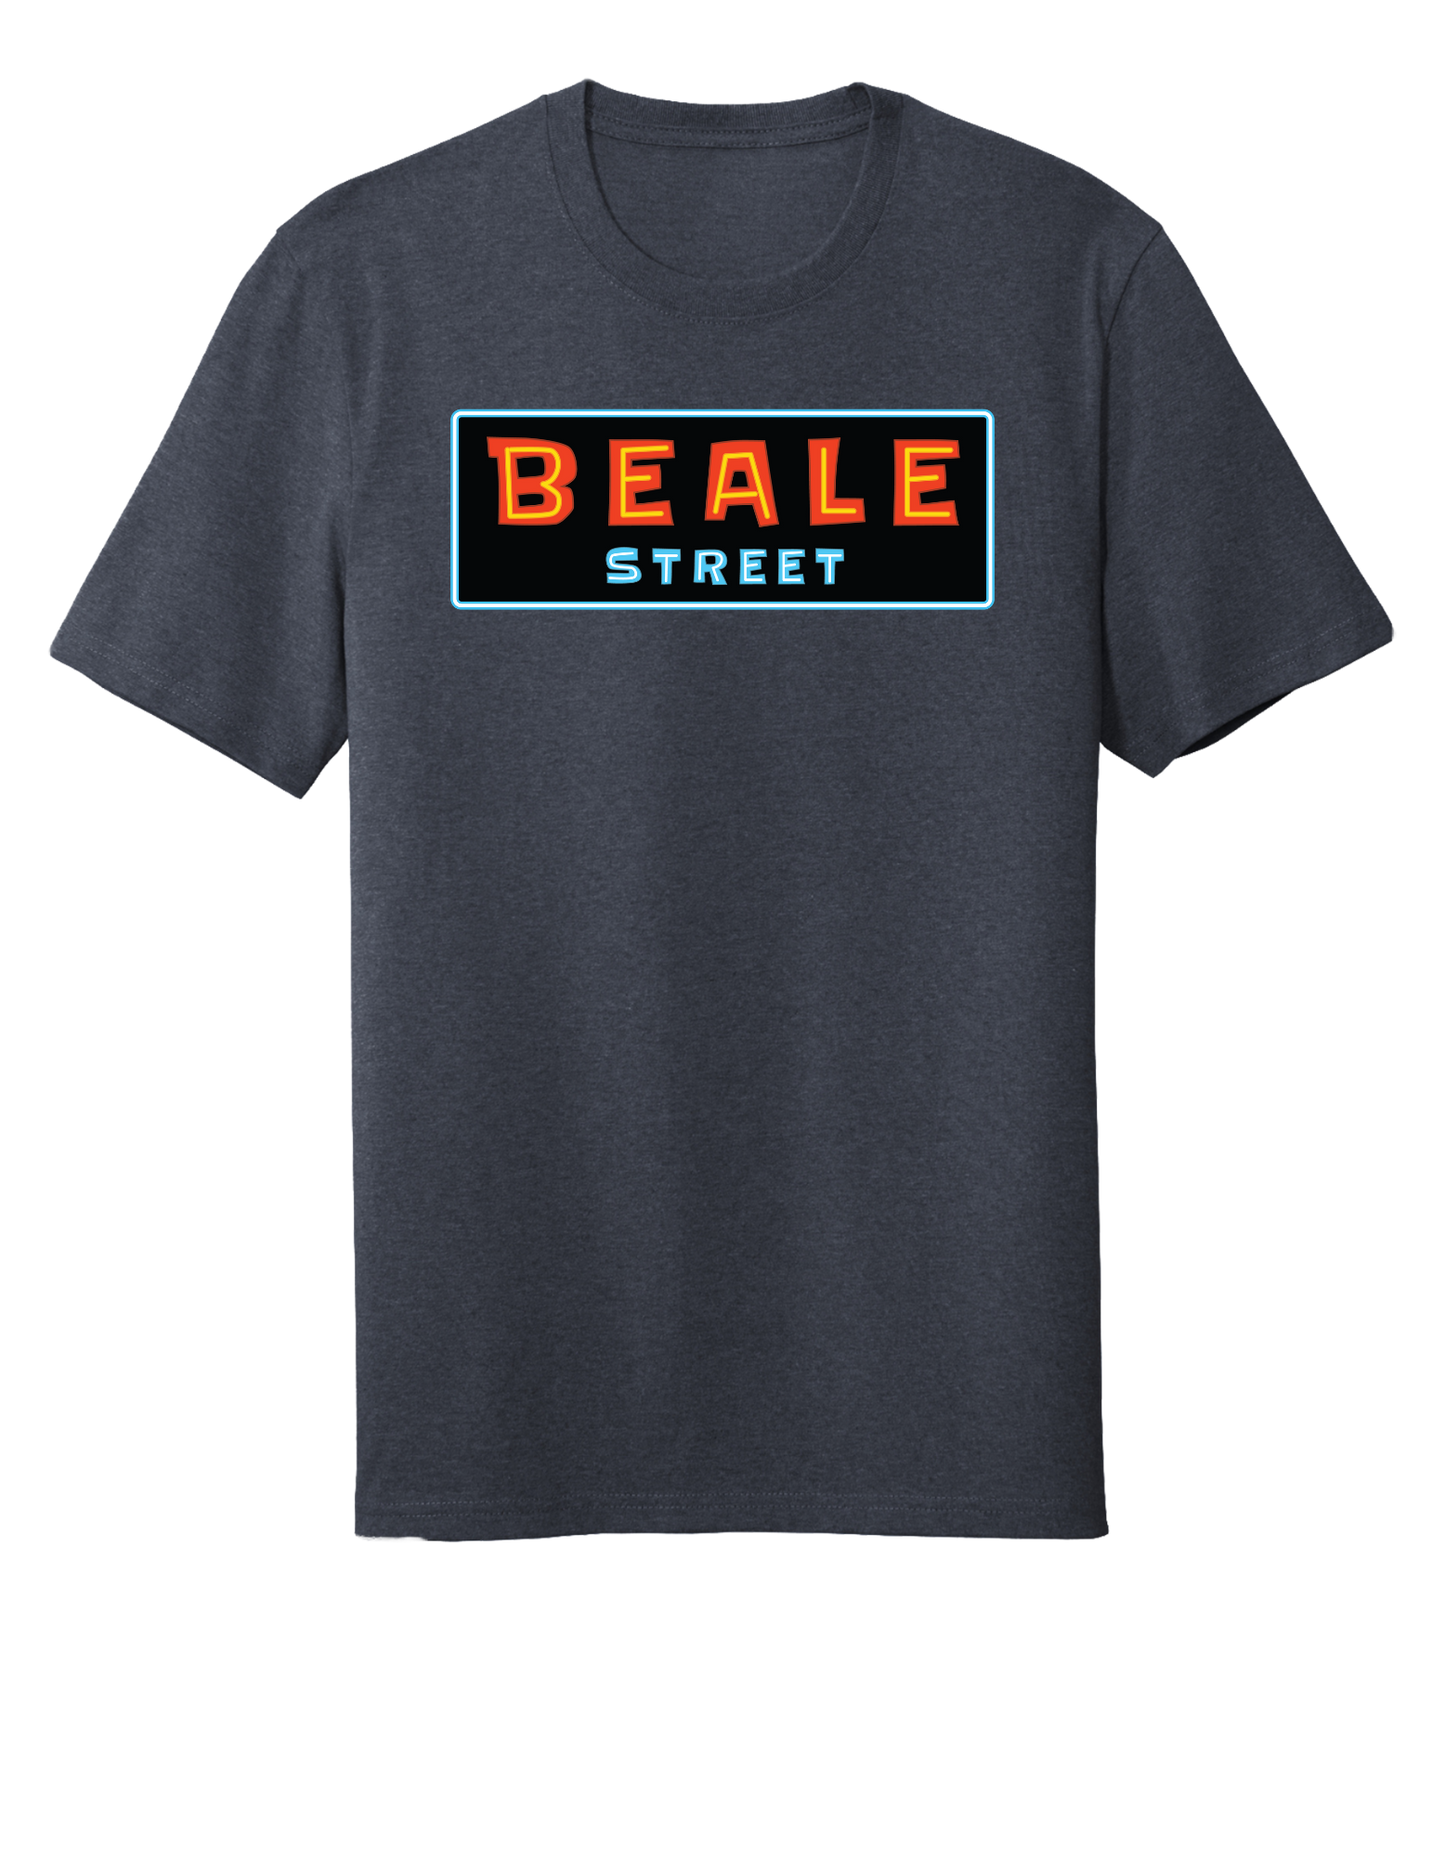 Beale Street T-Shirt - Navy Heather